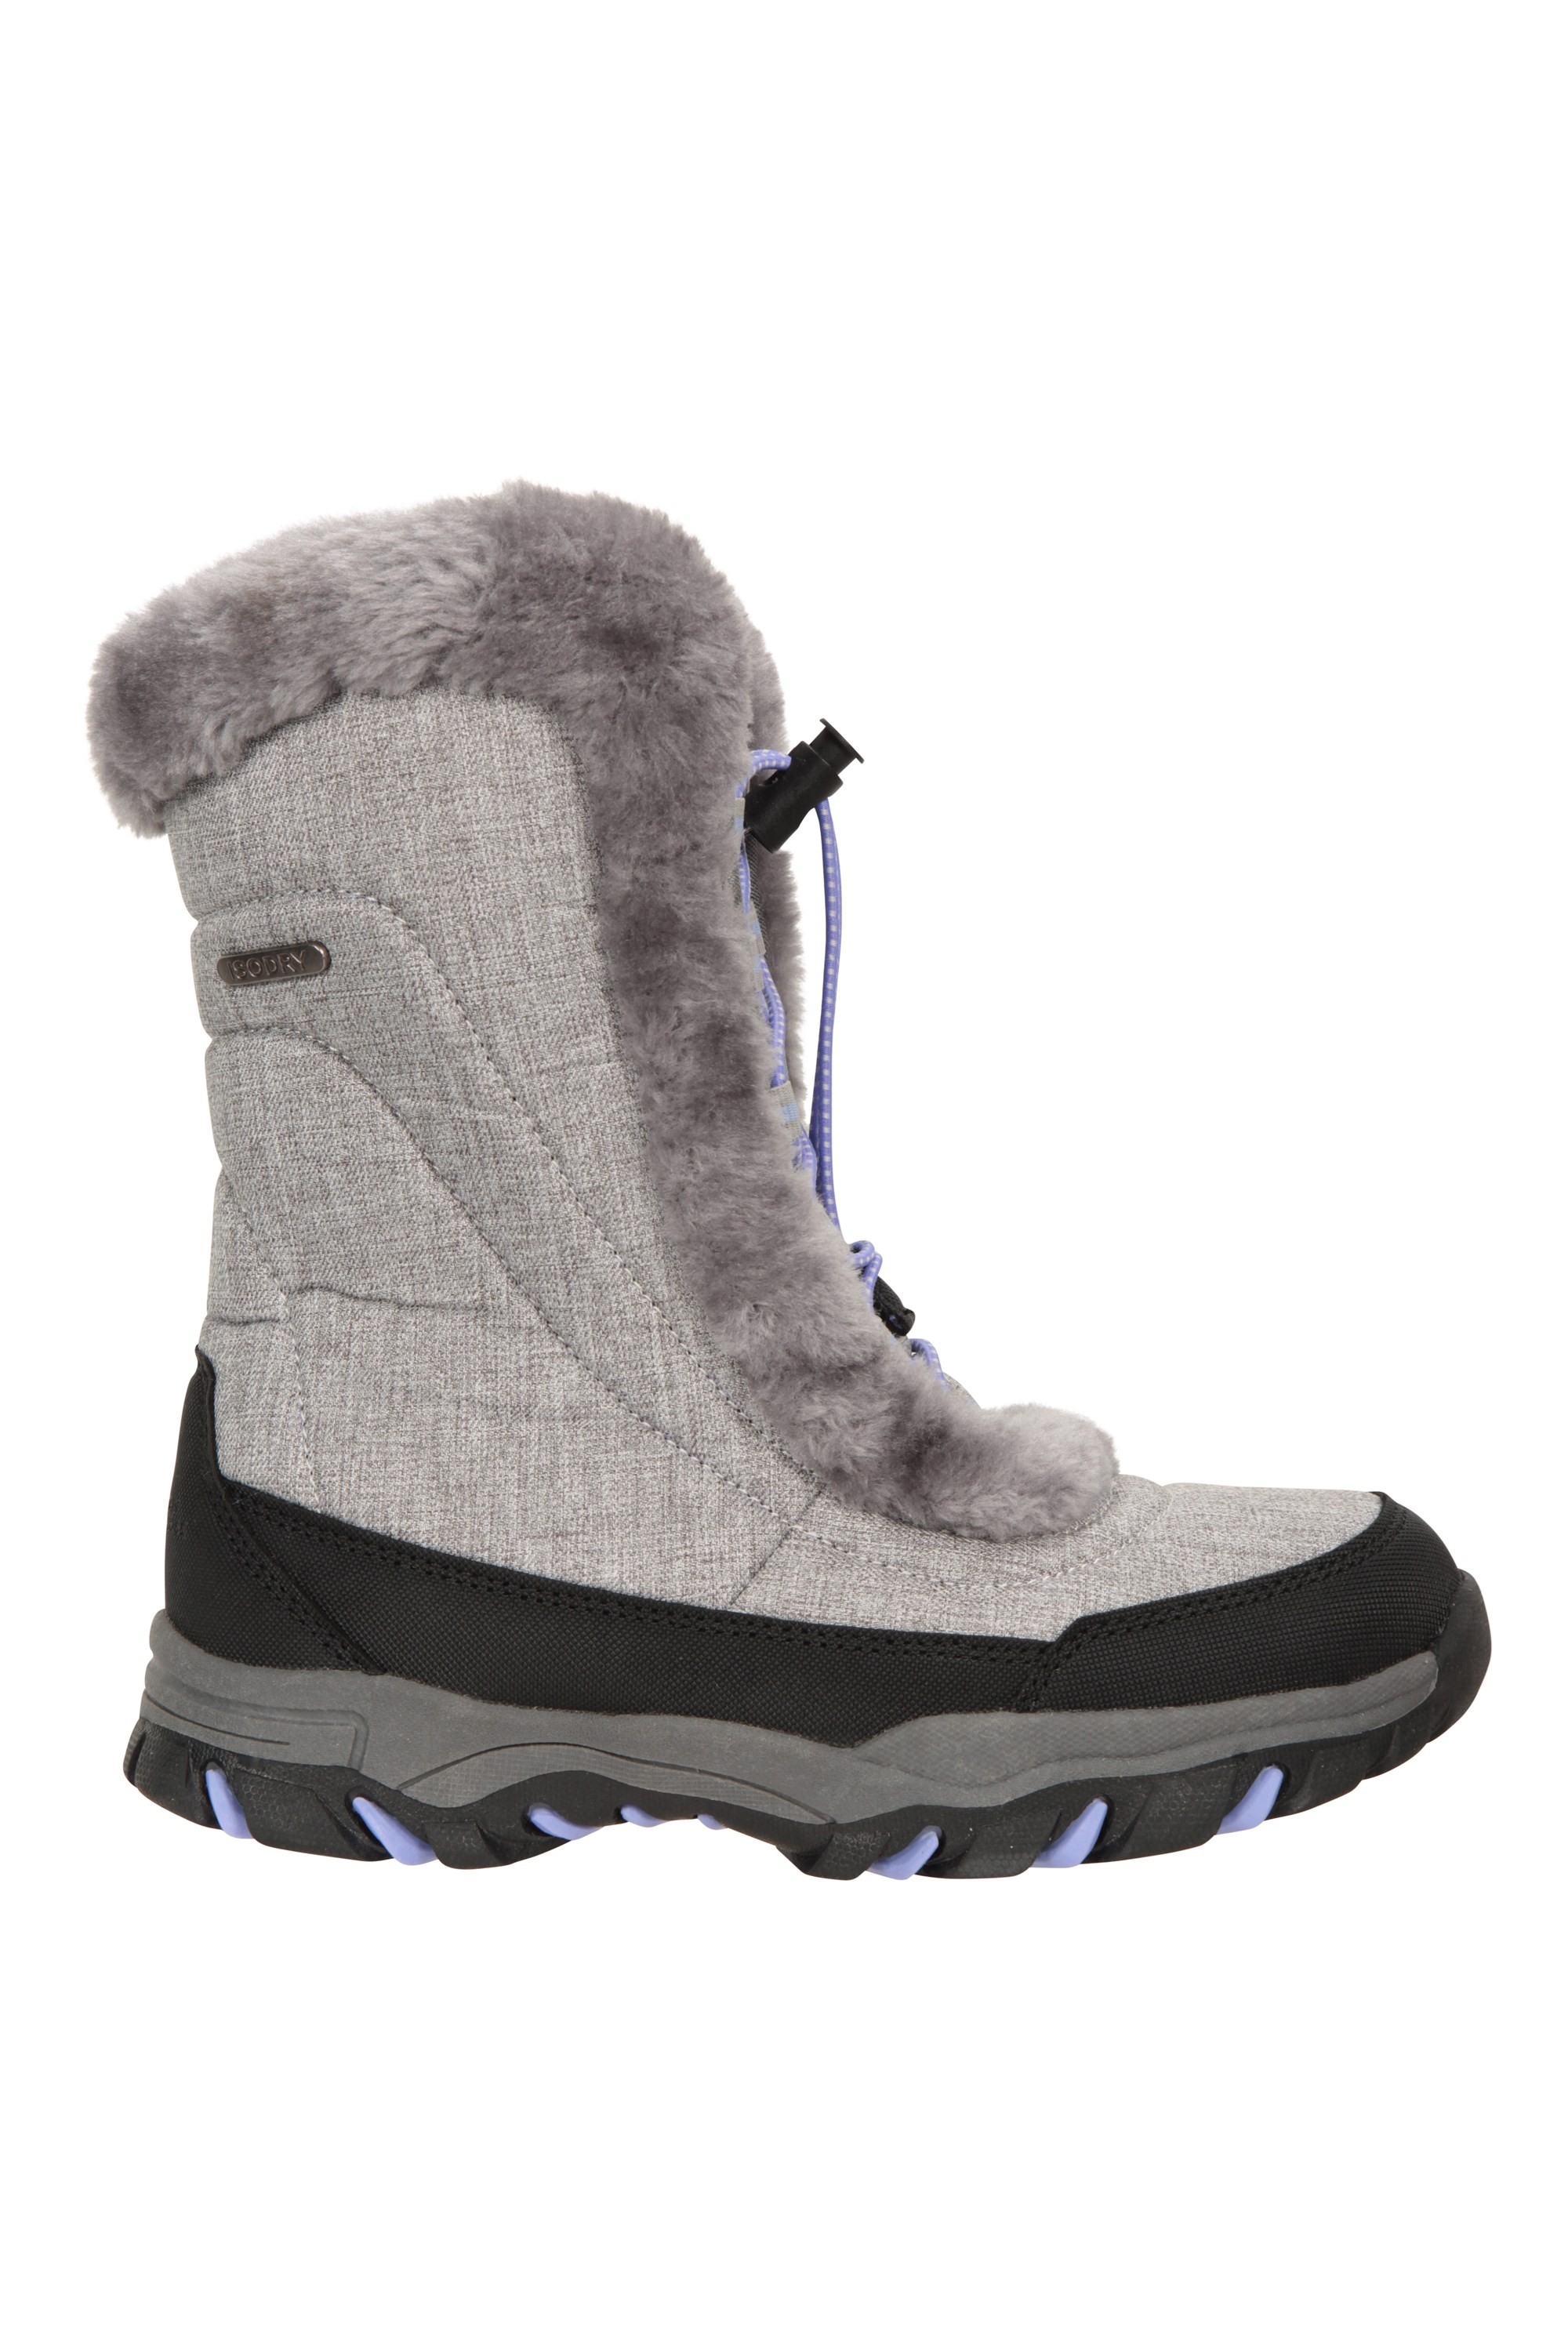 V1 Mountain Warehouse Mountain Warehouse Kids isodry Snow Boots Junior Fleece Winter size 11 